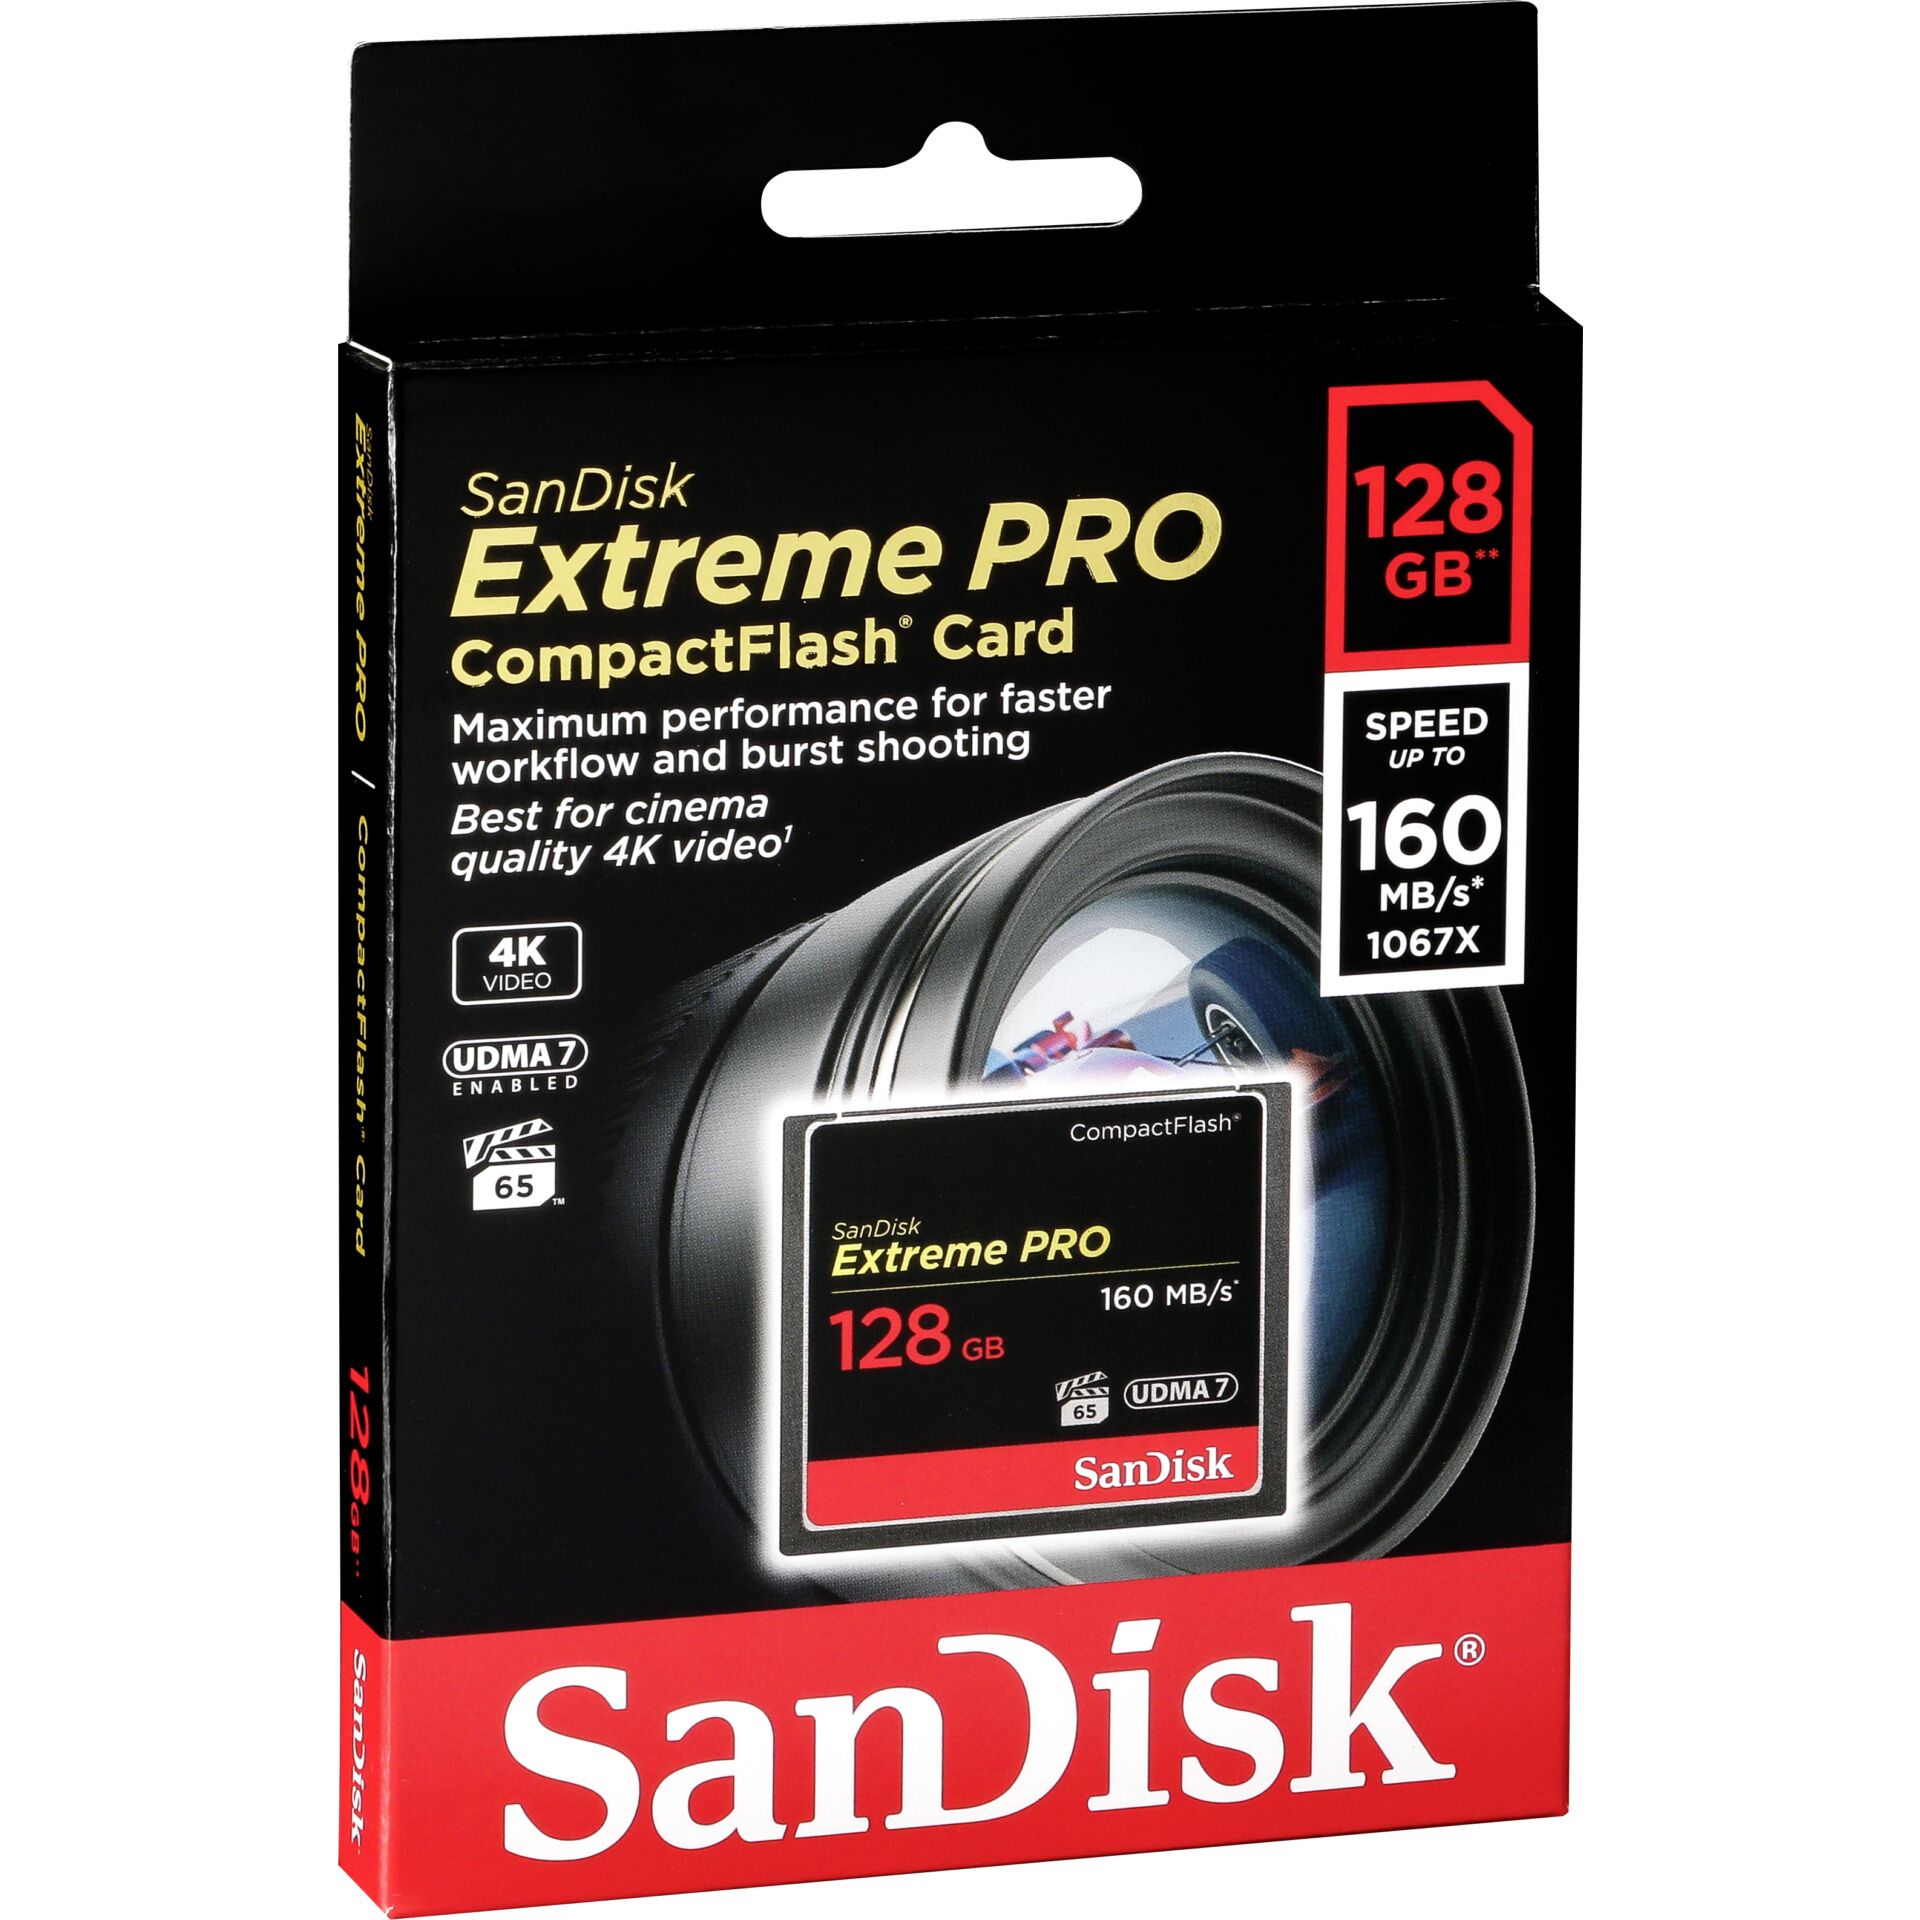 CompactFlash 128GB SanDisk Extreme Pro, 160MB/s 